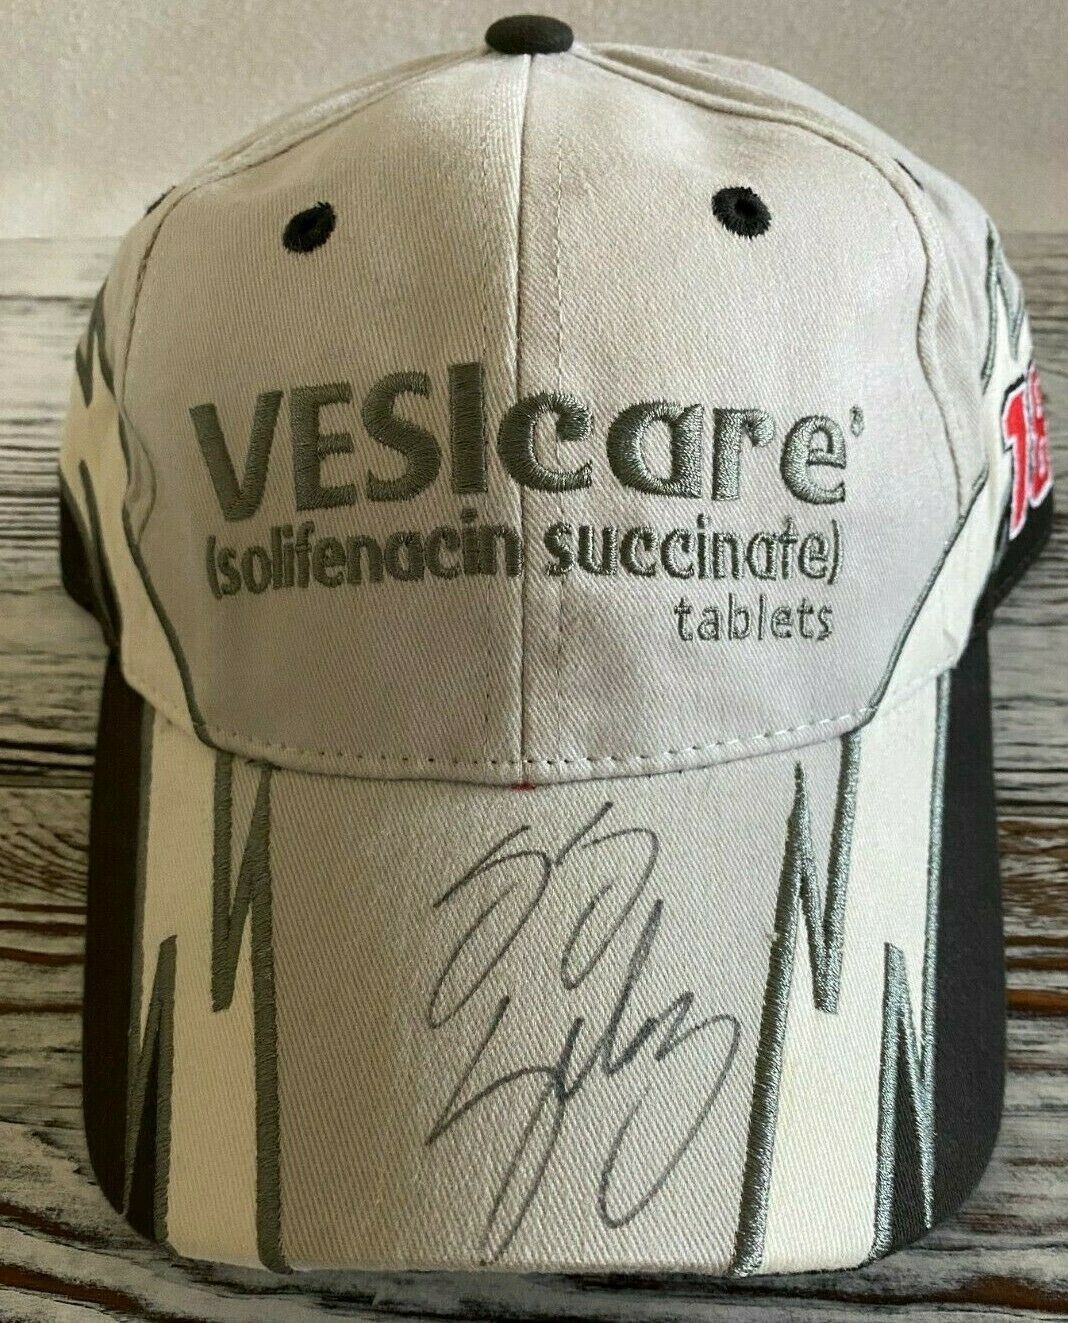 Jj Yeley Joe Gibbs Racing #18 Vesicare Signed Autographed Hat Cap Nascar